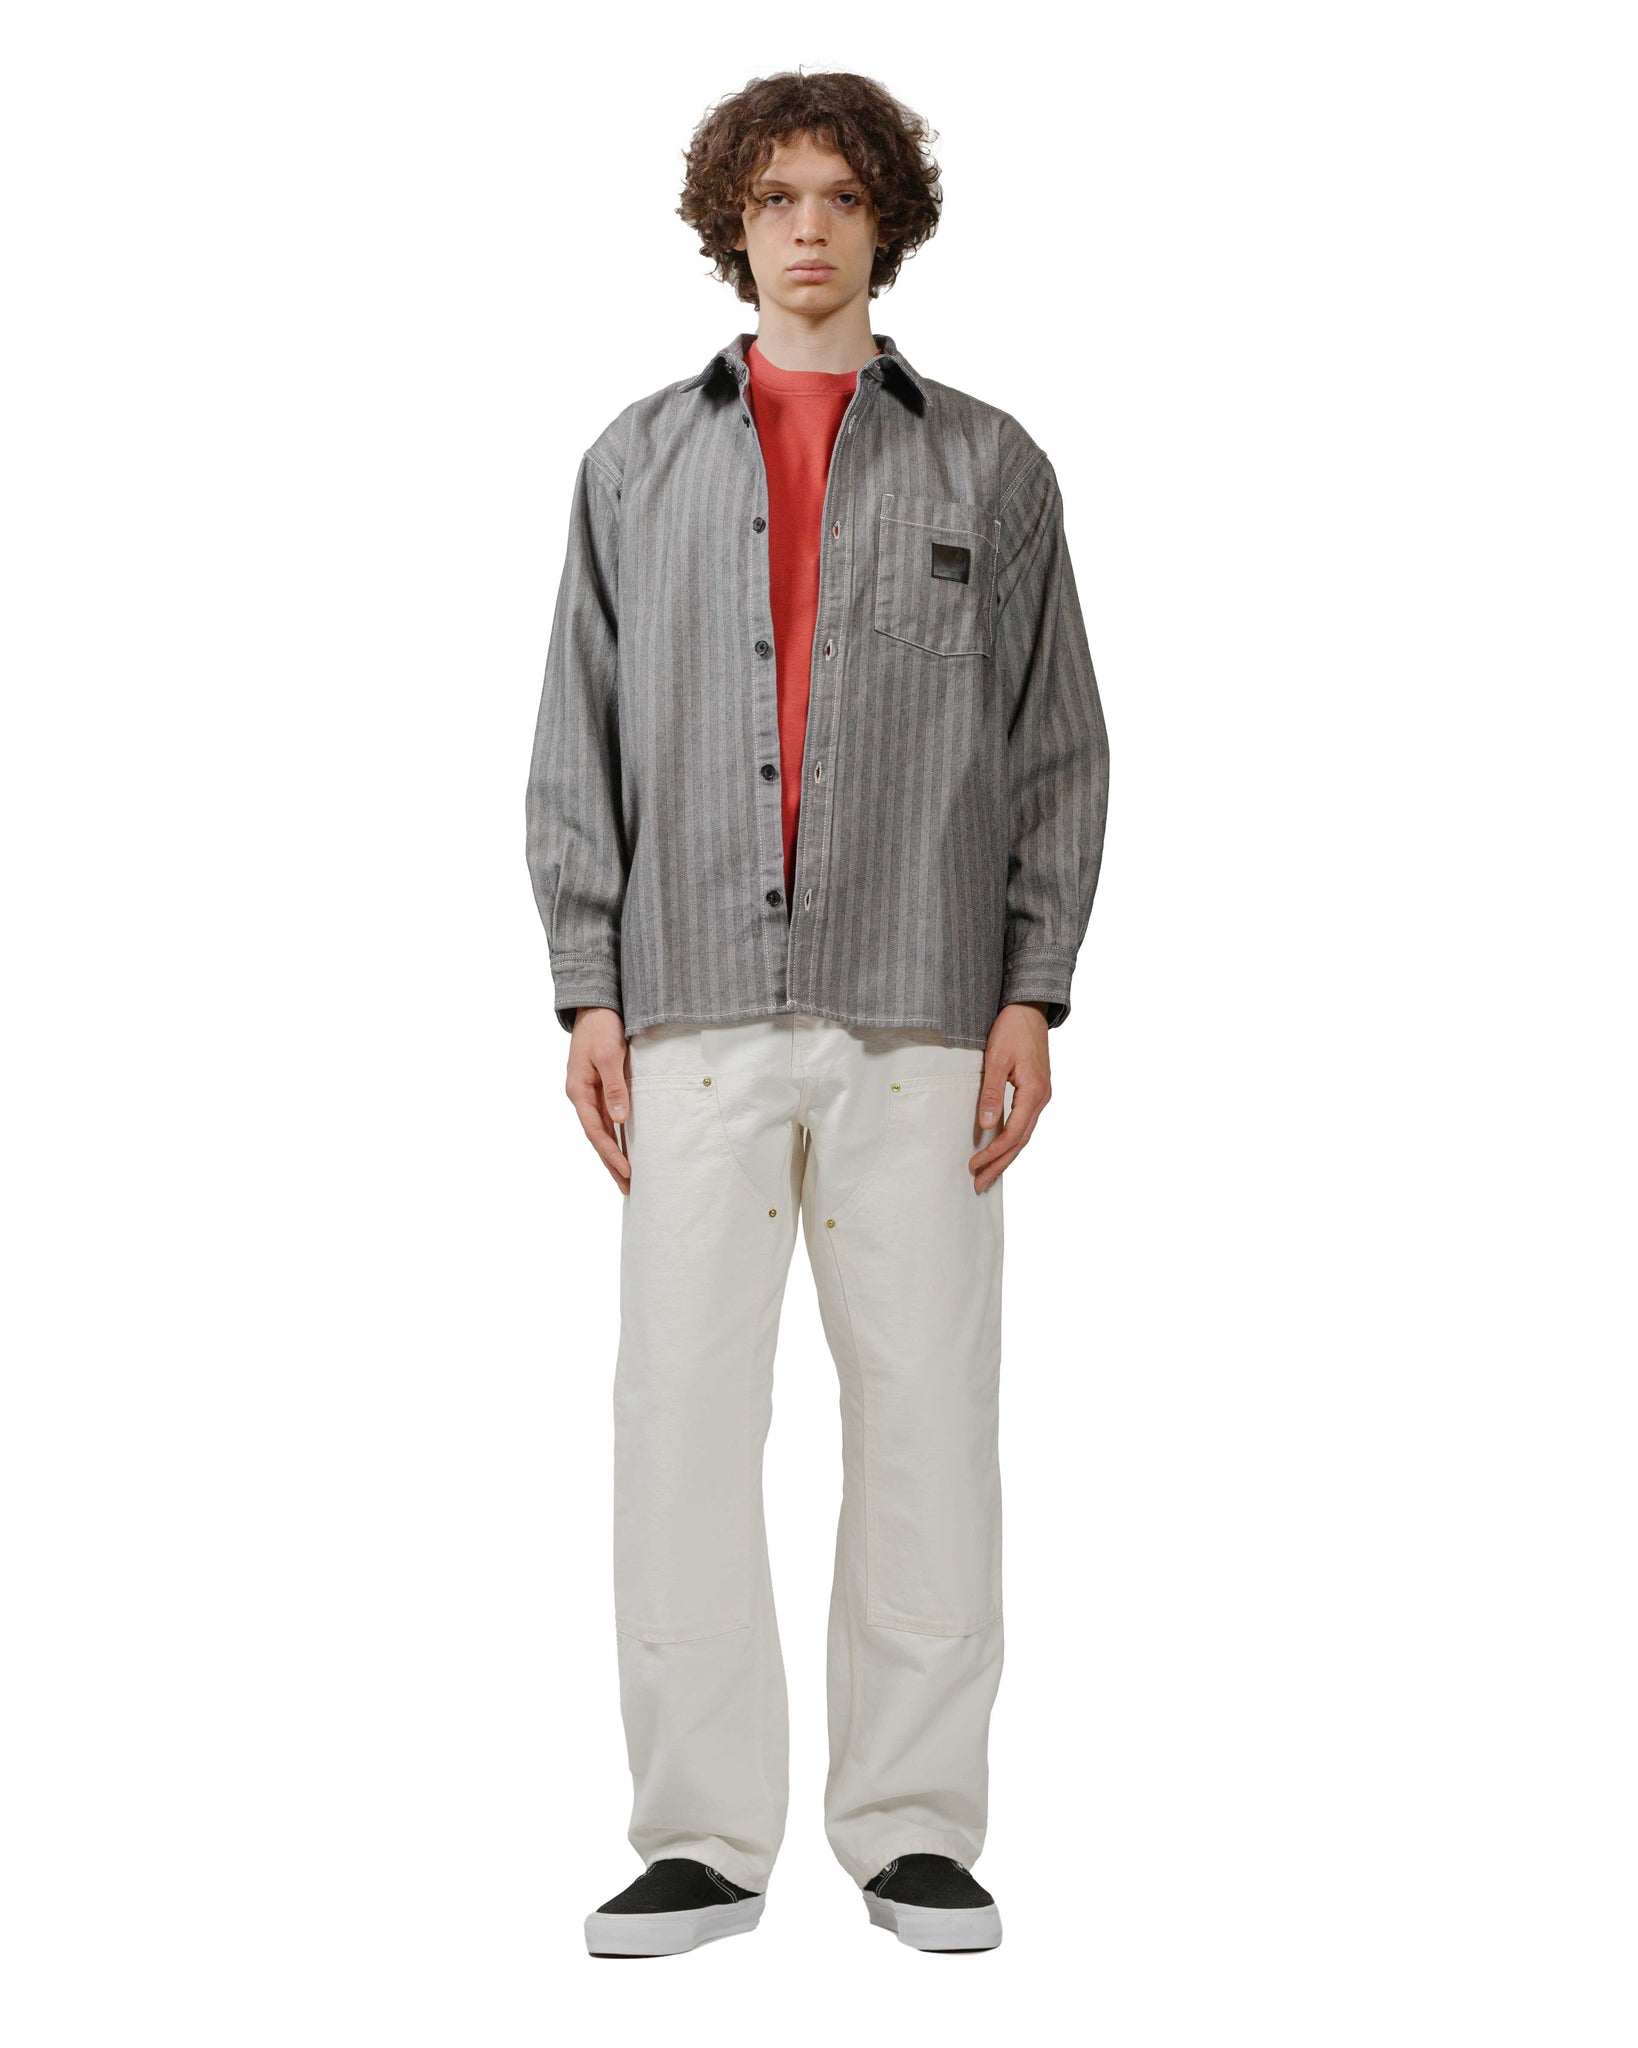 Carhartt W.I.P. Menard Shirt Jacket Grey model full